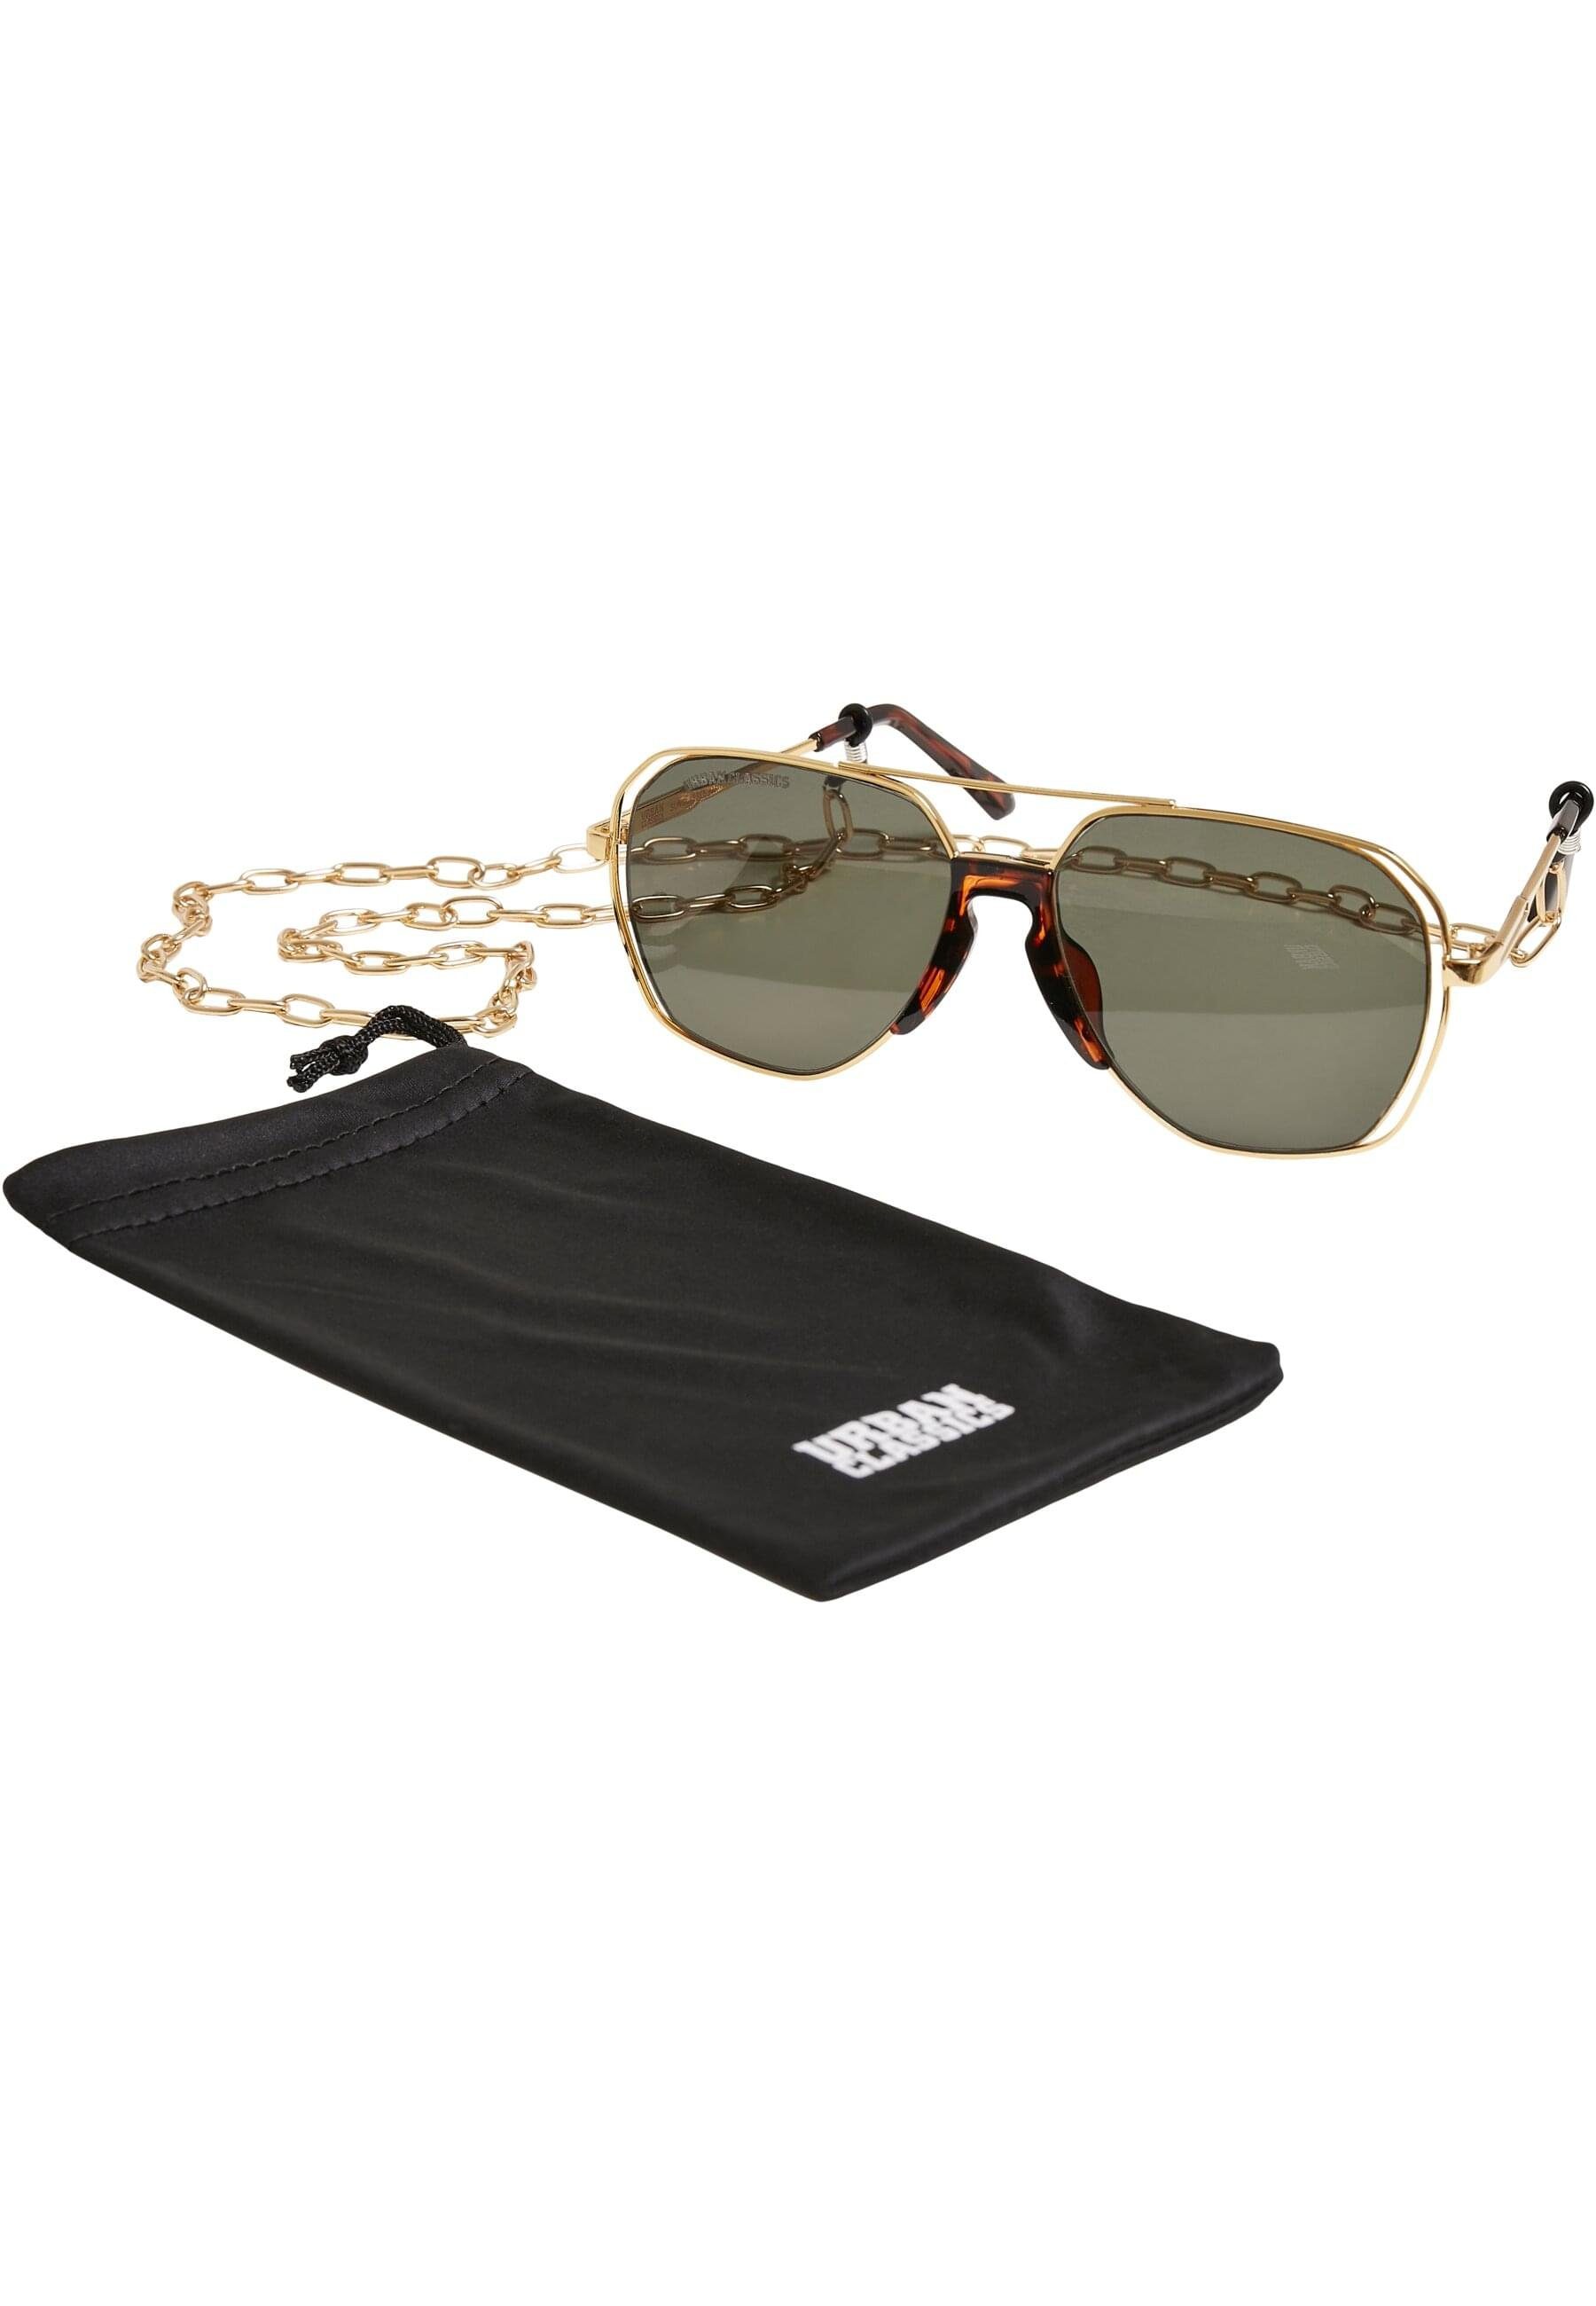 URBAN CLASSICS Sonnenbrille Unisex Sunglasses Karphatos with Chain gold